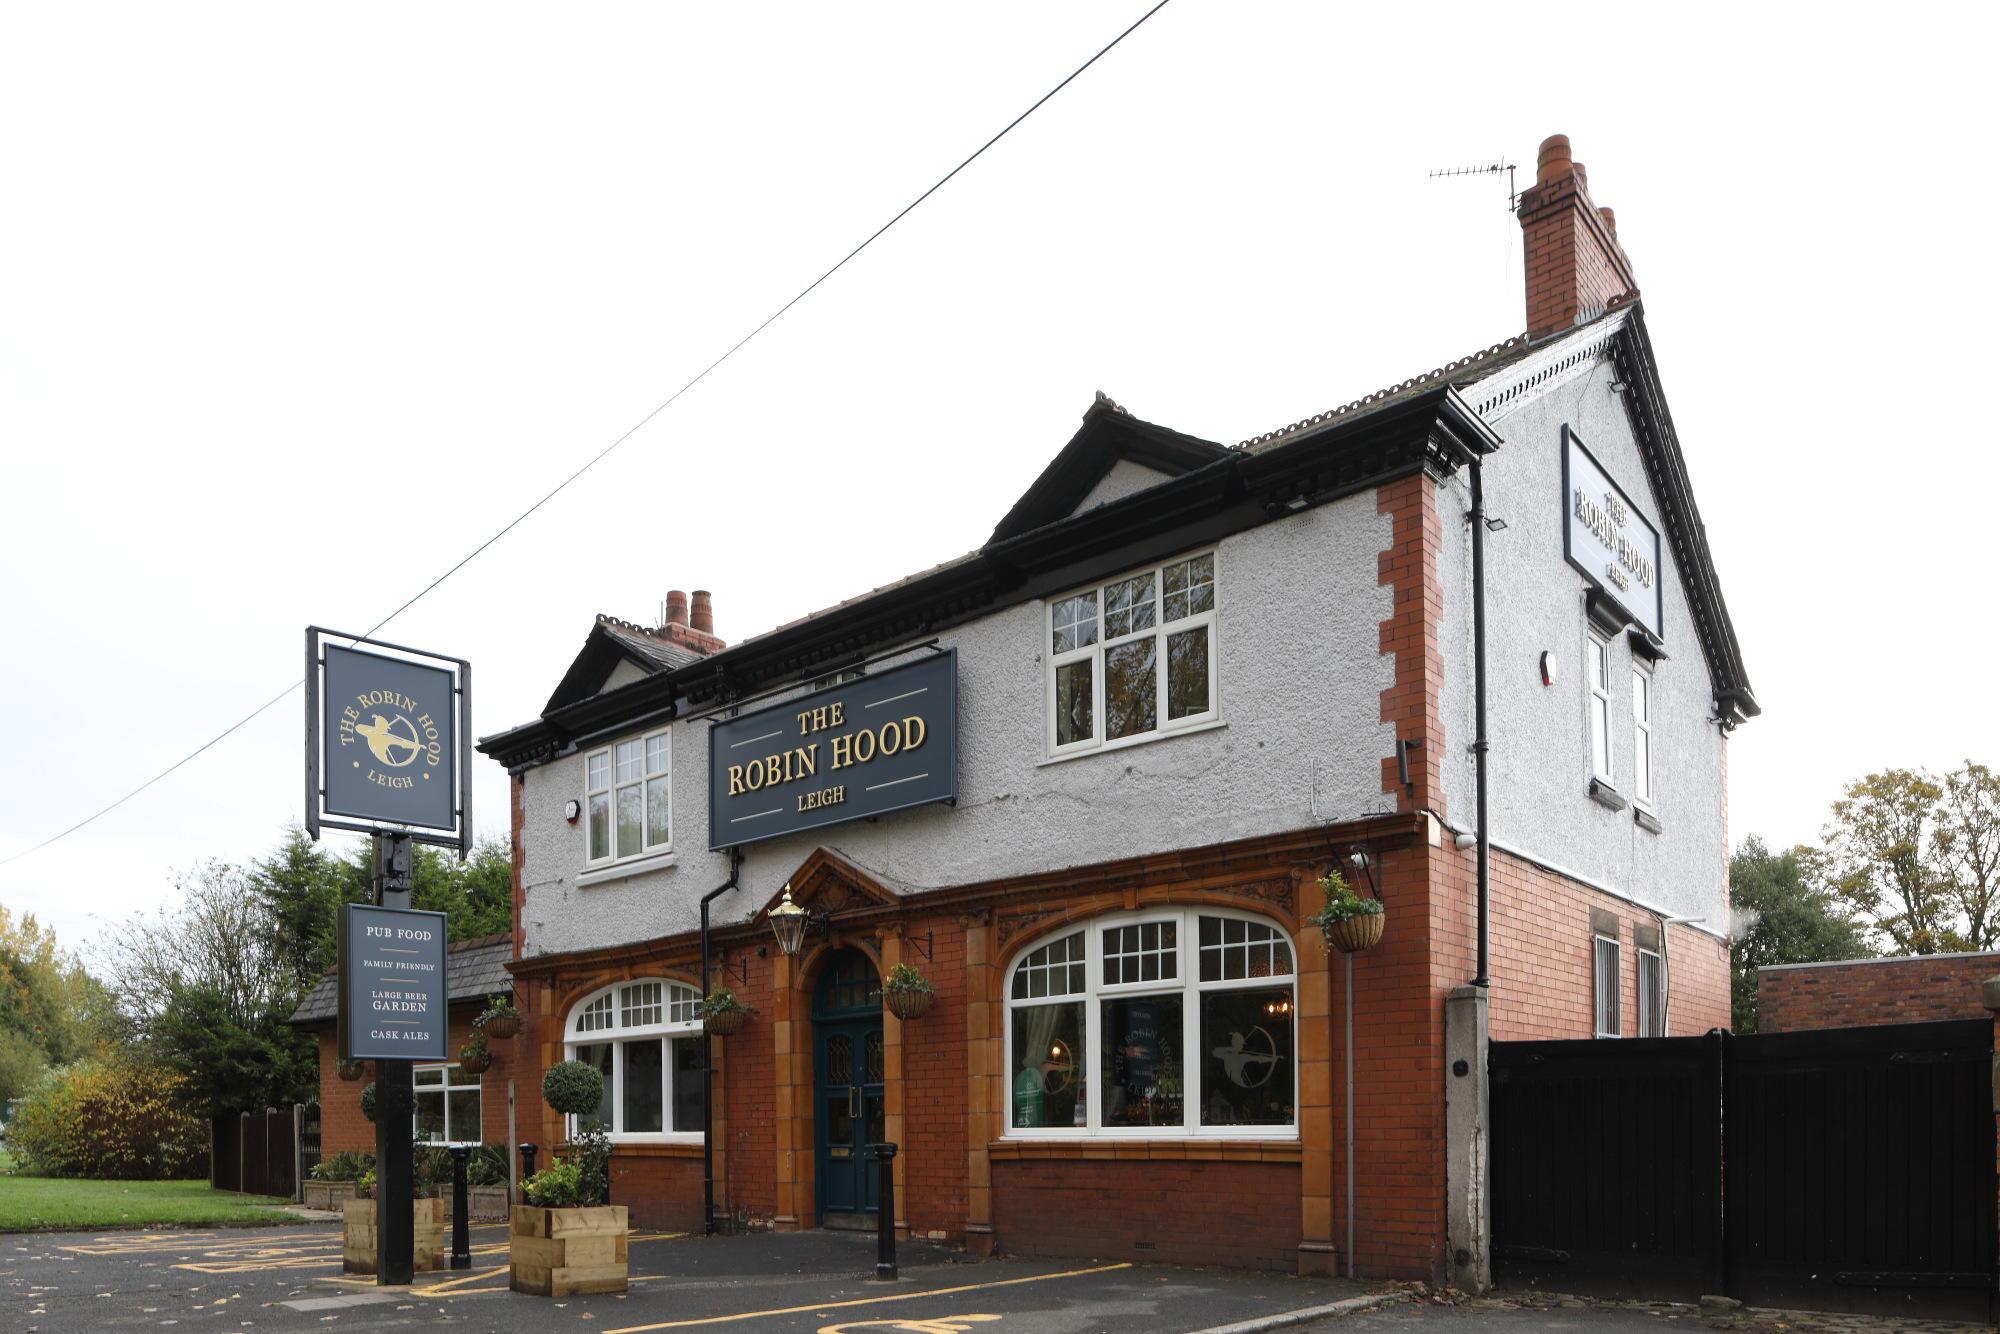 The Robin Hood pub in Leigh